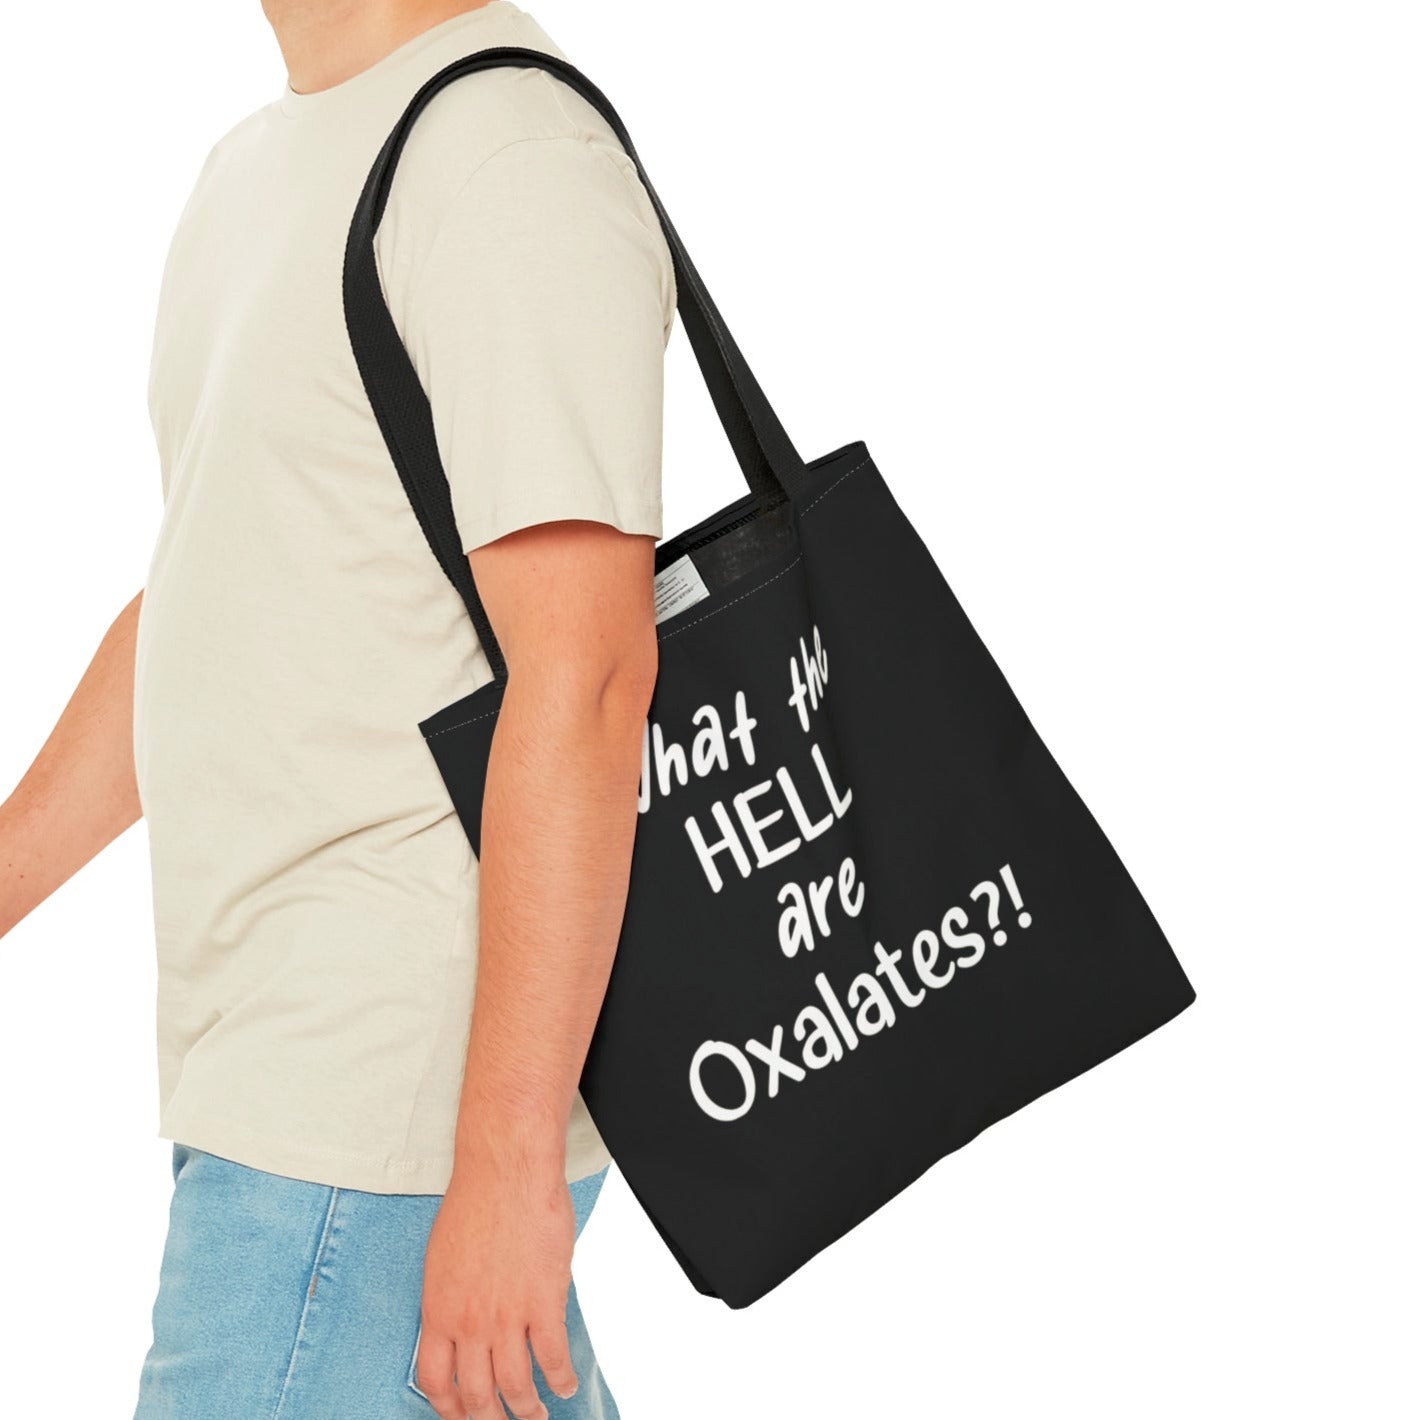 Low Oxalate Style Wellness Tote Bag